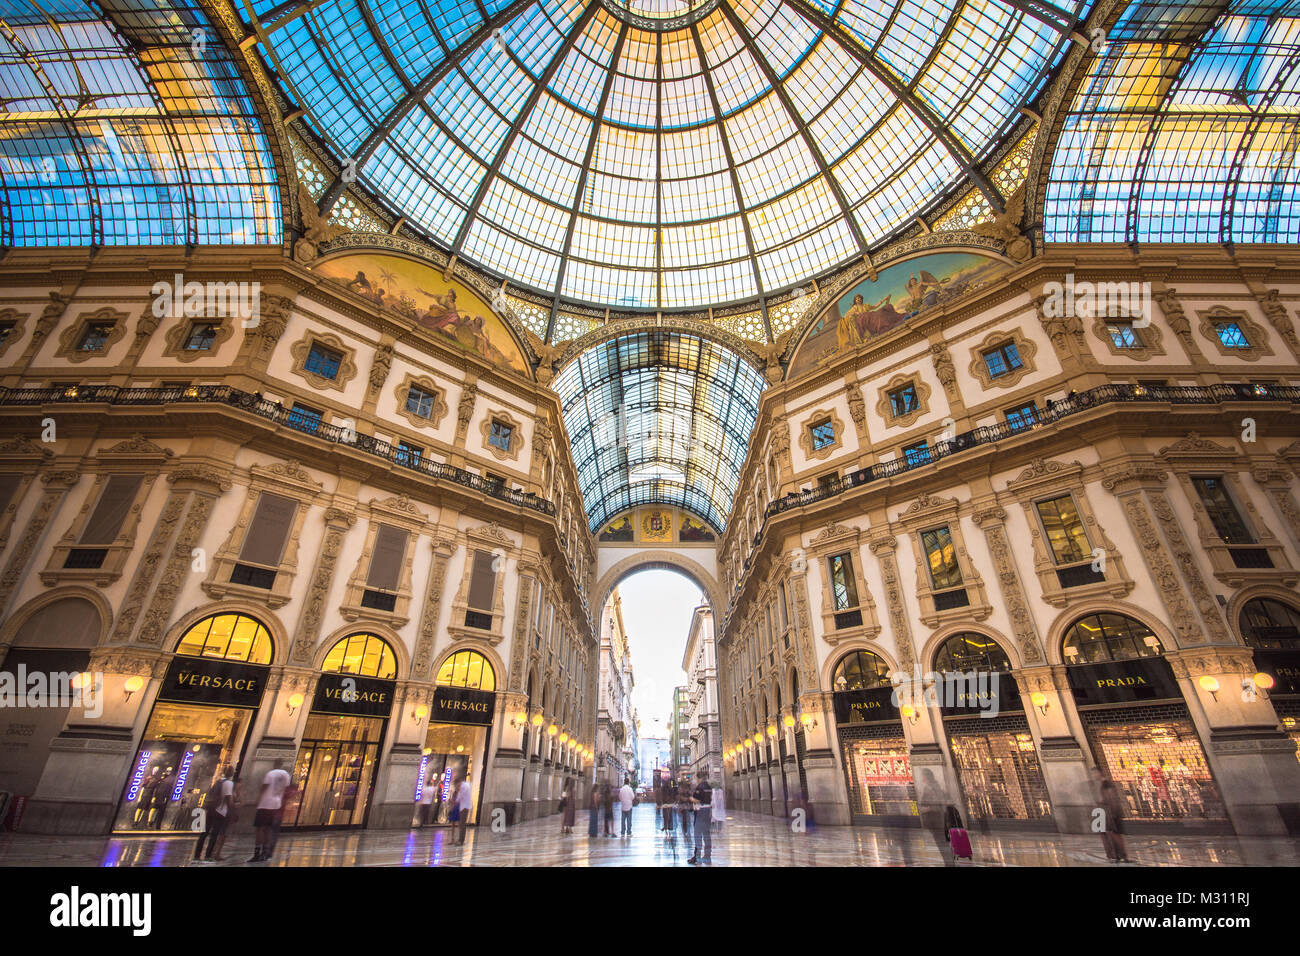 File:Galleria Vittorio Emanuele II 2382.jpg - Wikipedia